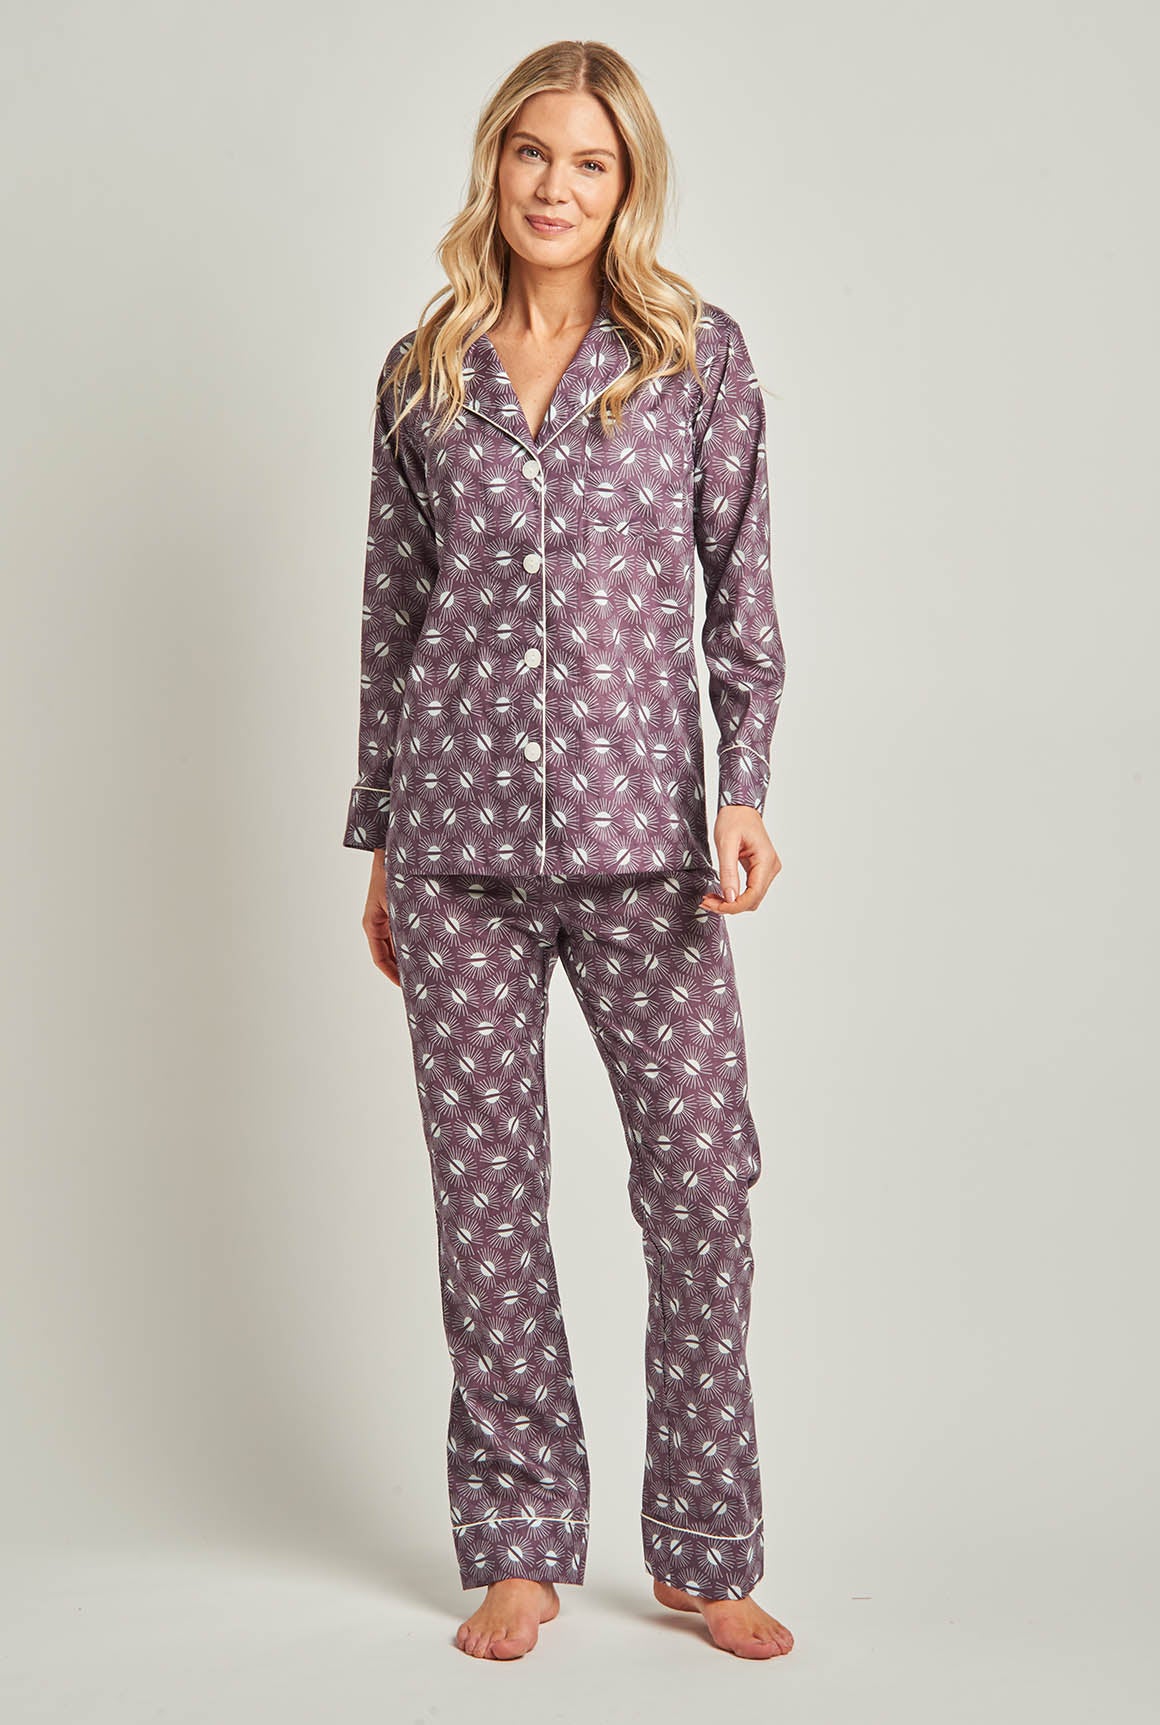 Just Love 100% Cotton Women's Capri Pajama Pants Sleepwear - Comfortable  and Stylish (Grey Plaid, Small)